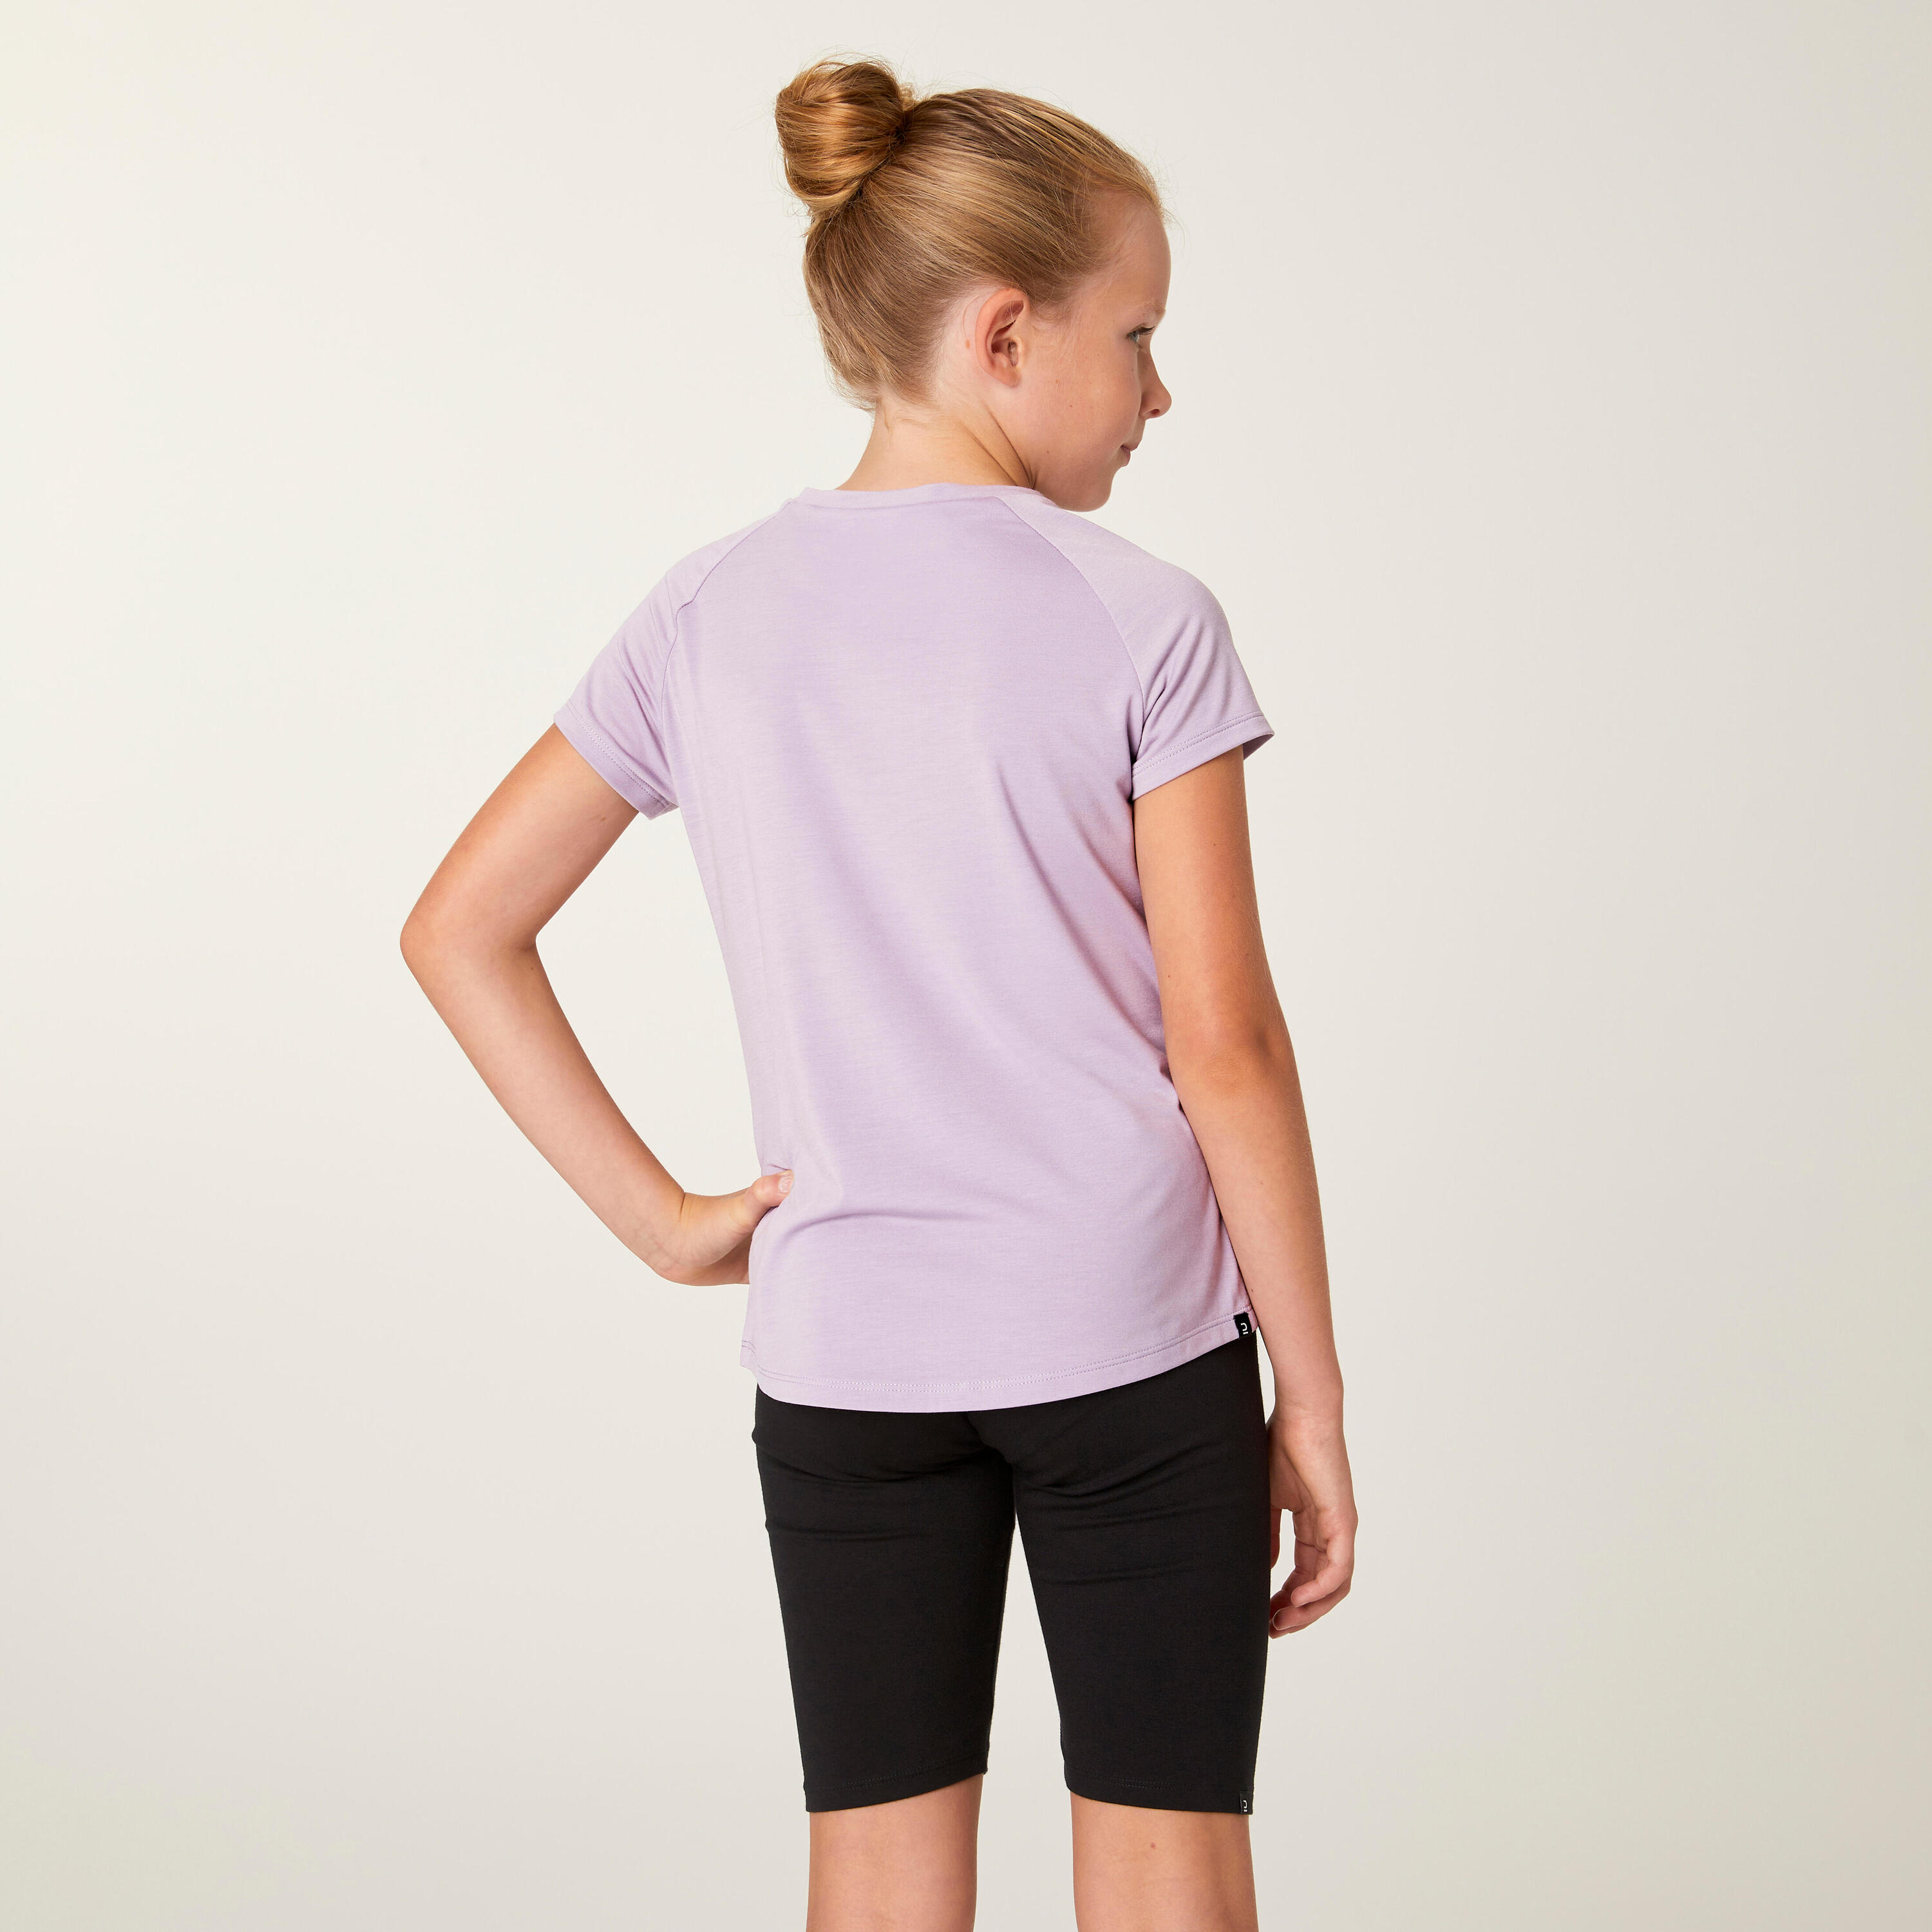 Girls' Breathable T-Shirt S500 - Purple 4/4